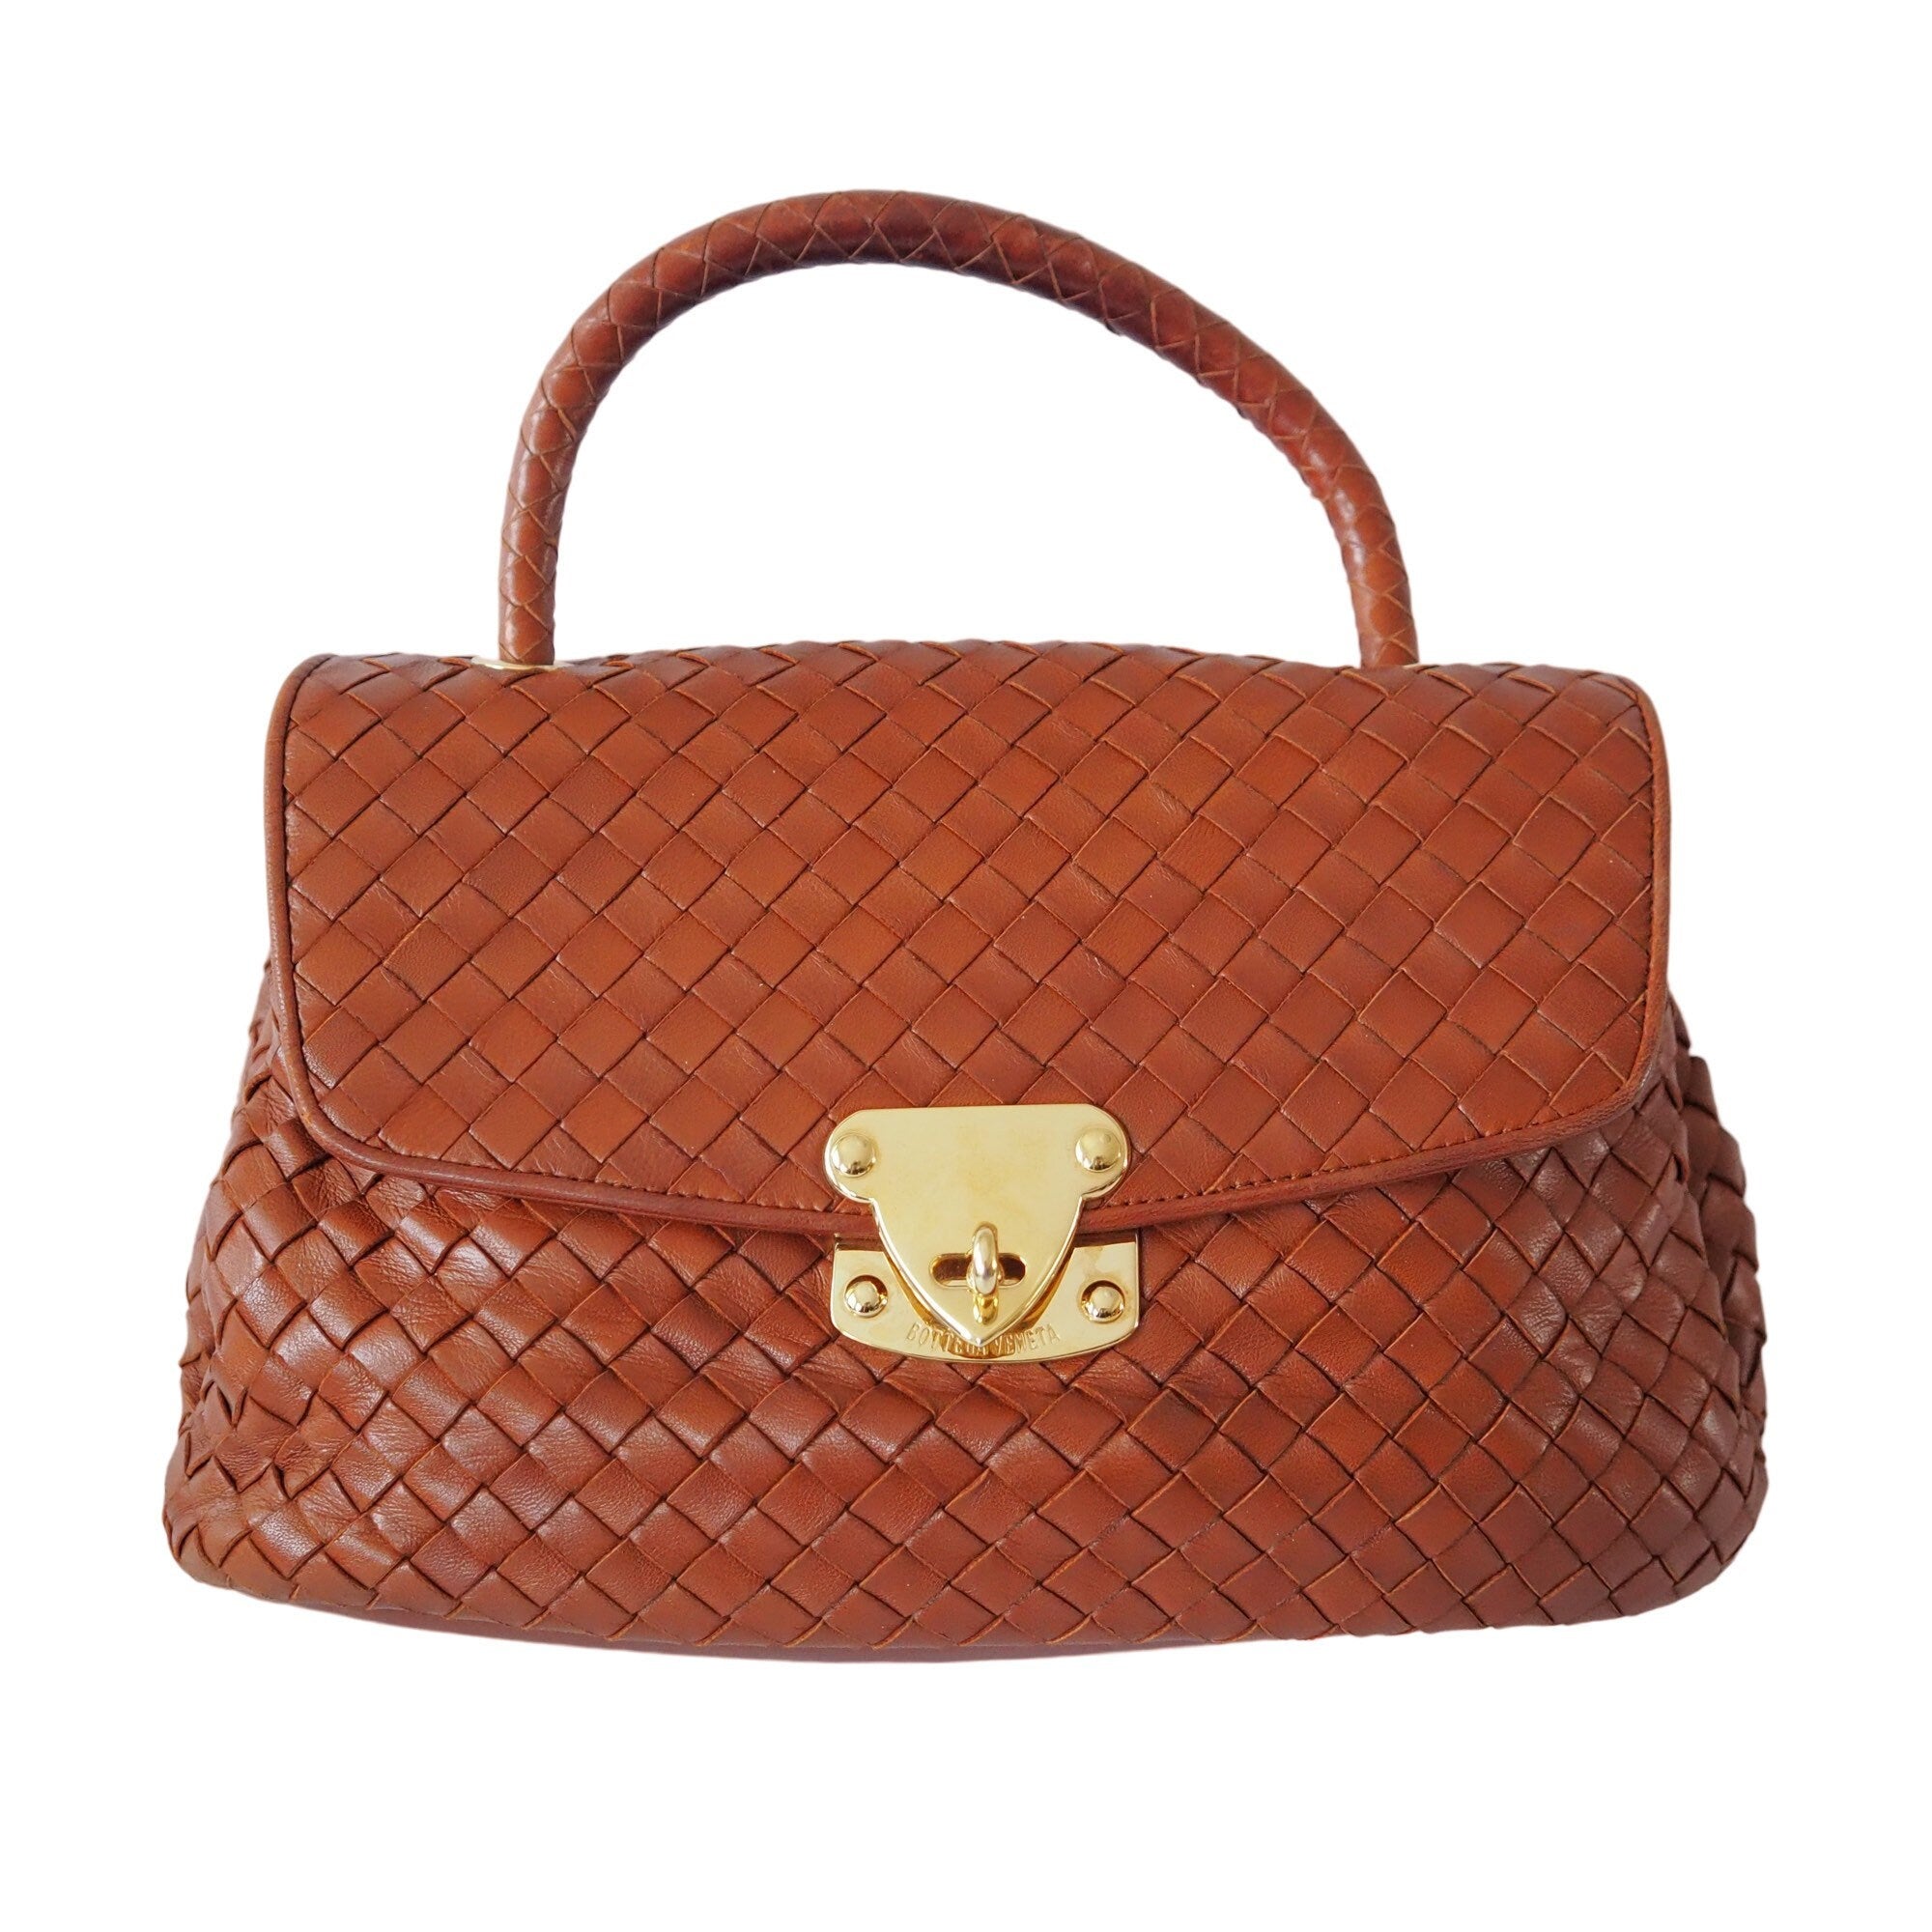 BOTTEGA VENETA Intrecciato Leather Handbag Brown Leather Vintage Authentic